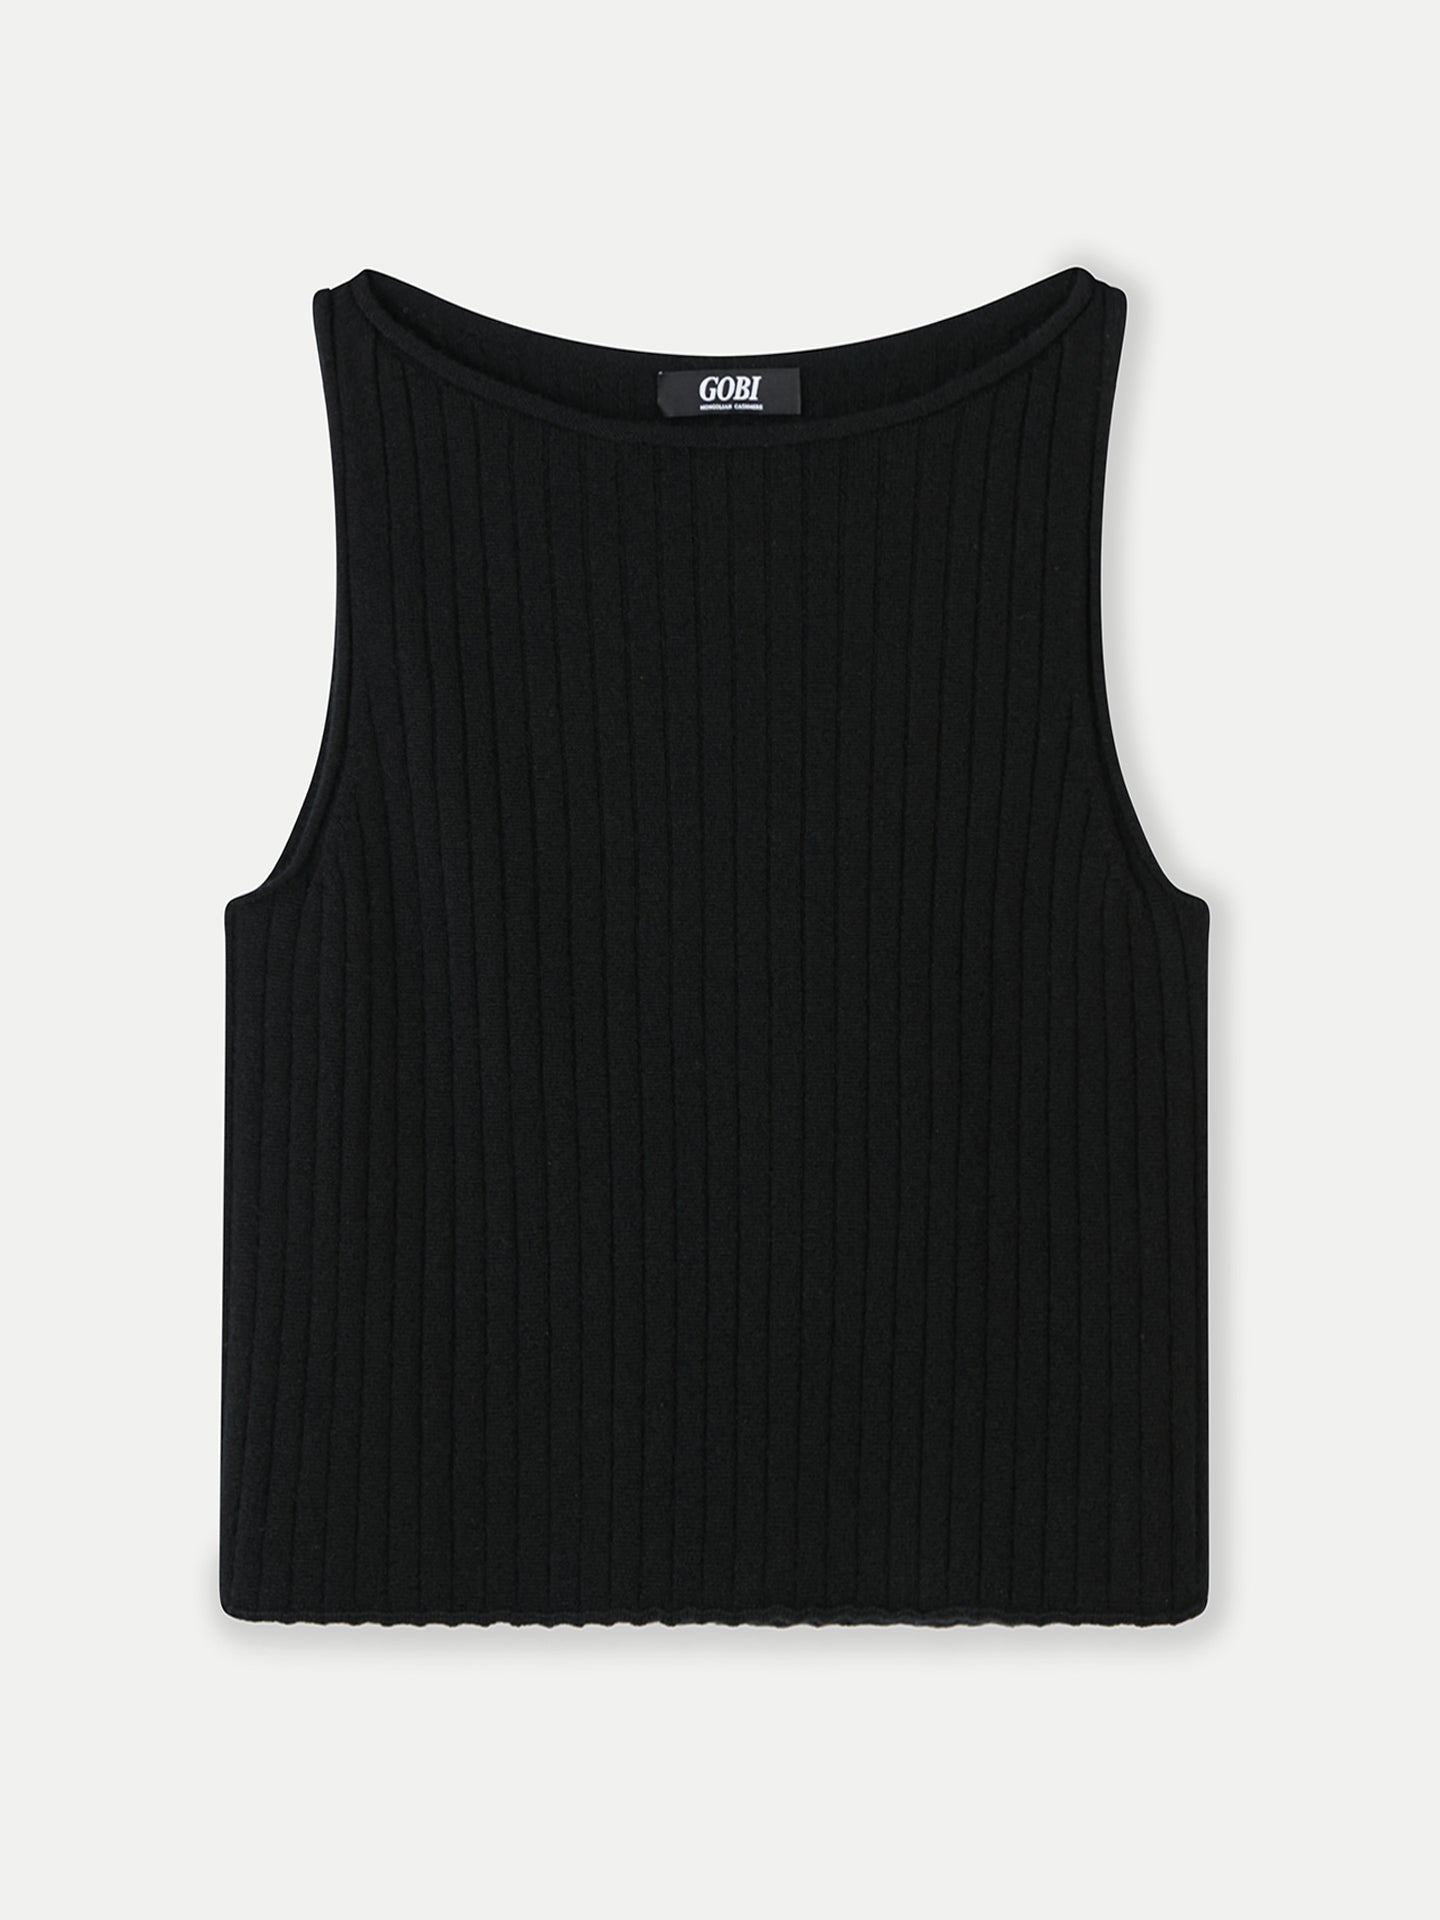 Women's Cashmere Crop Top Black - Gobi Cashmere